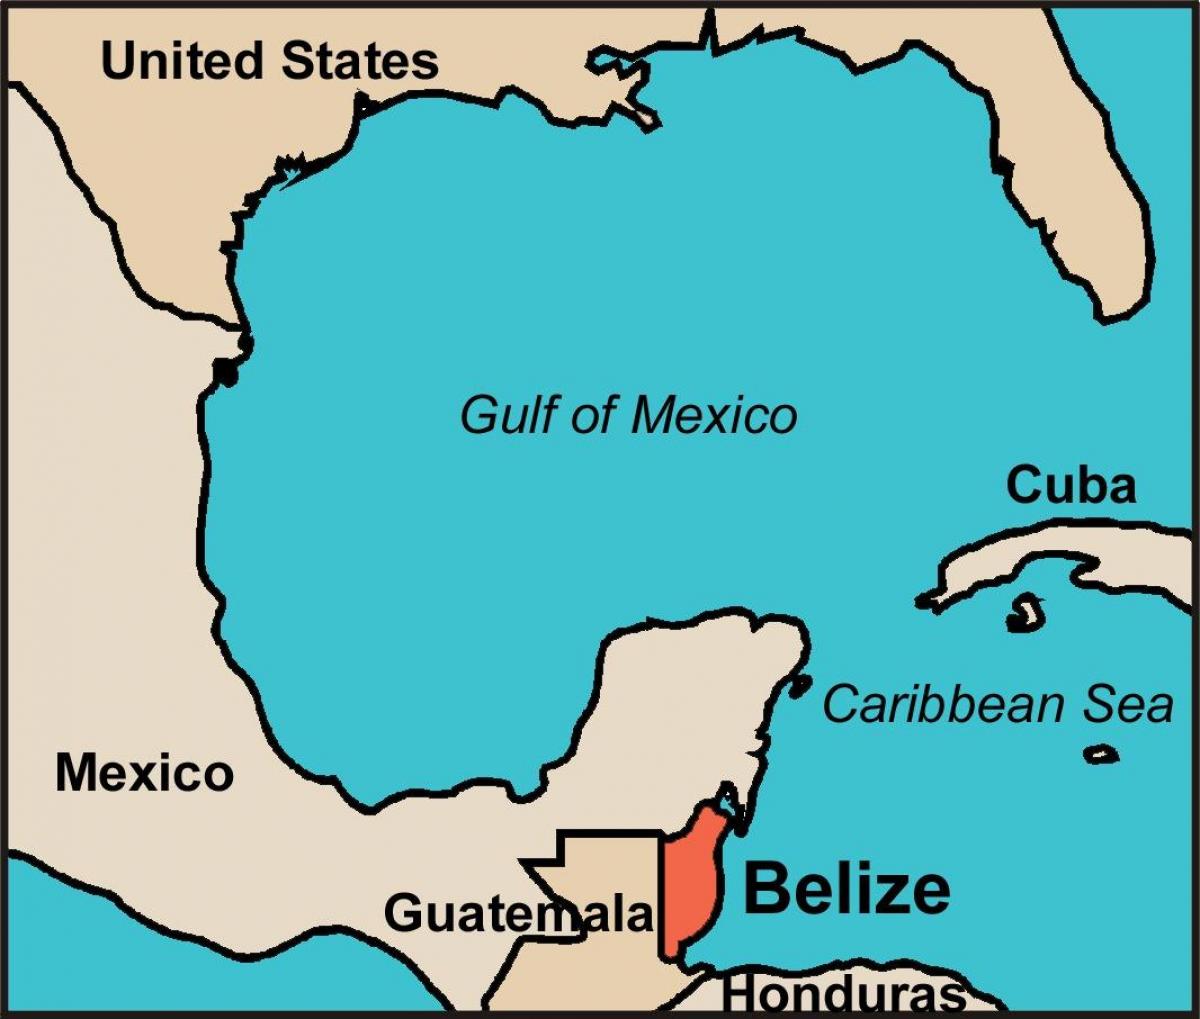 Belize landi kort